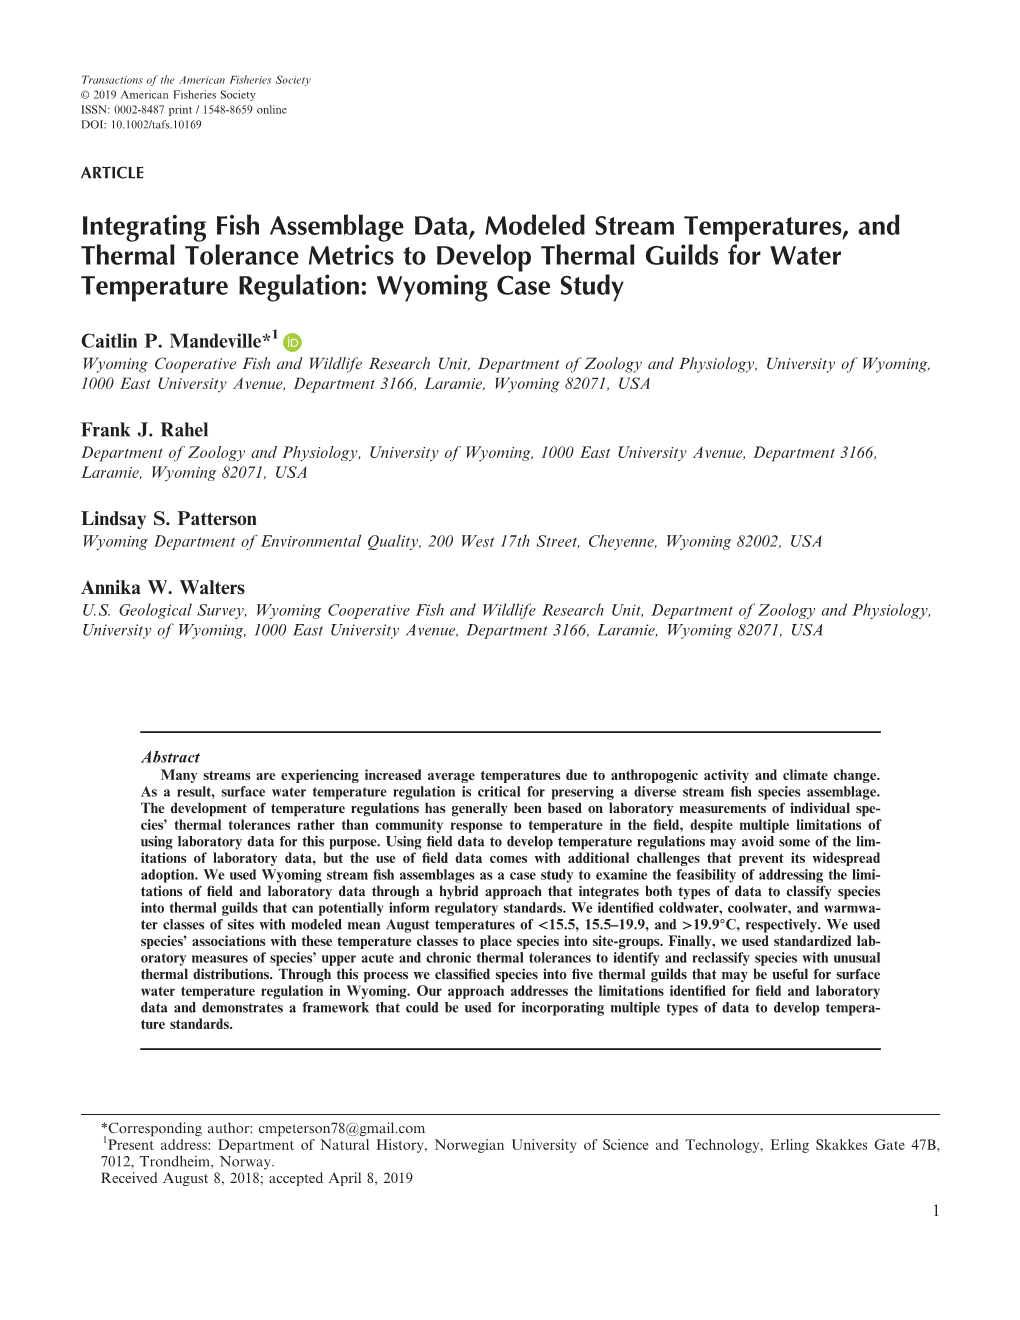 Integrating Fish Assemblage Data, Modeled Stream Temperatures